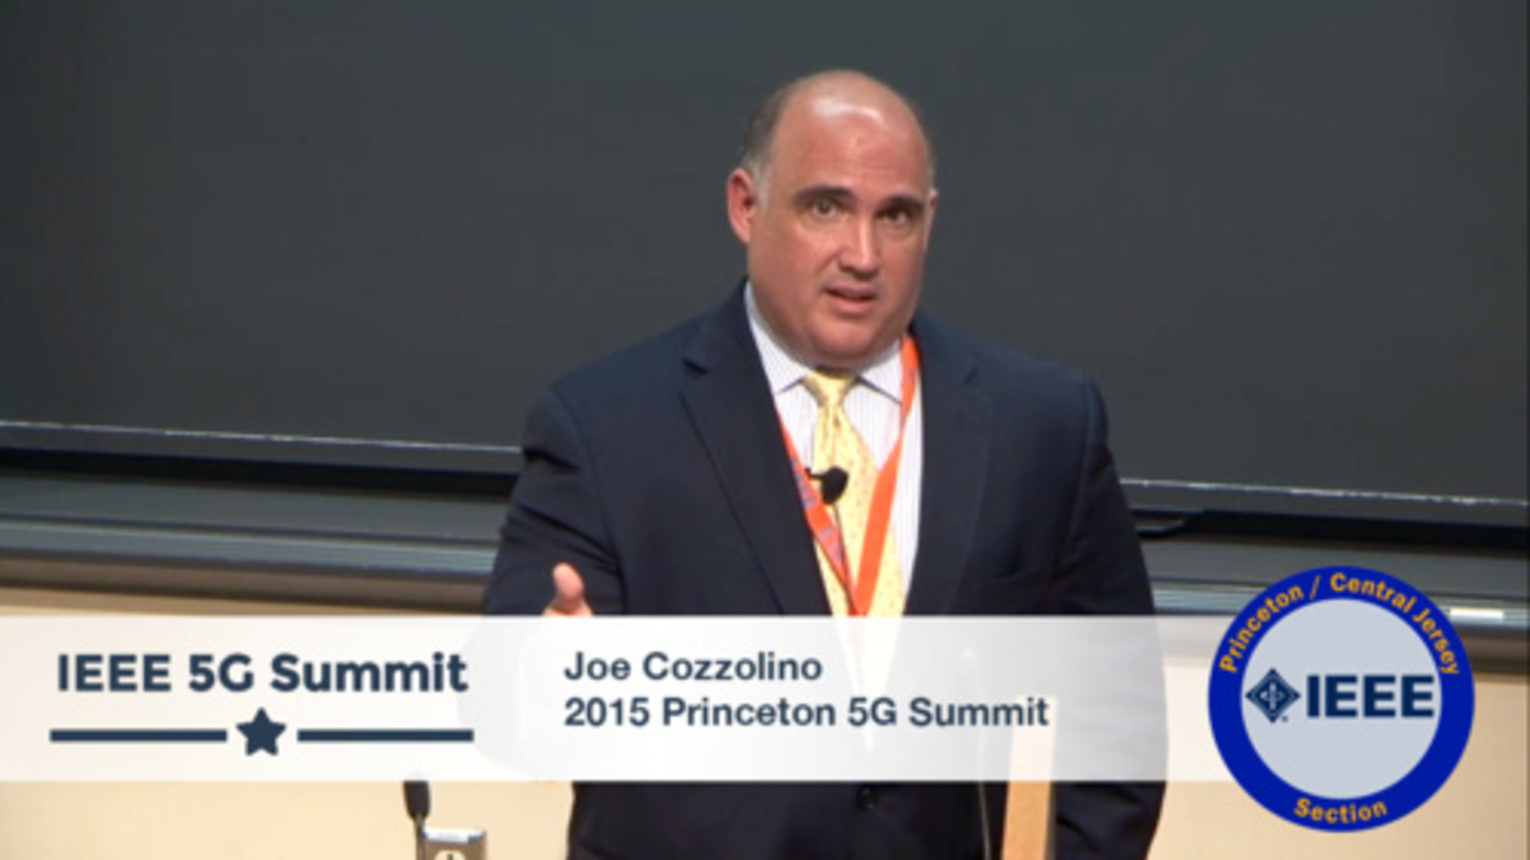 Princeton 5G Summit - Joe Cozzolino Keynote - Internet 3.0 - The Next Generation